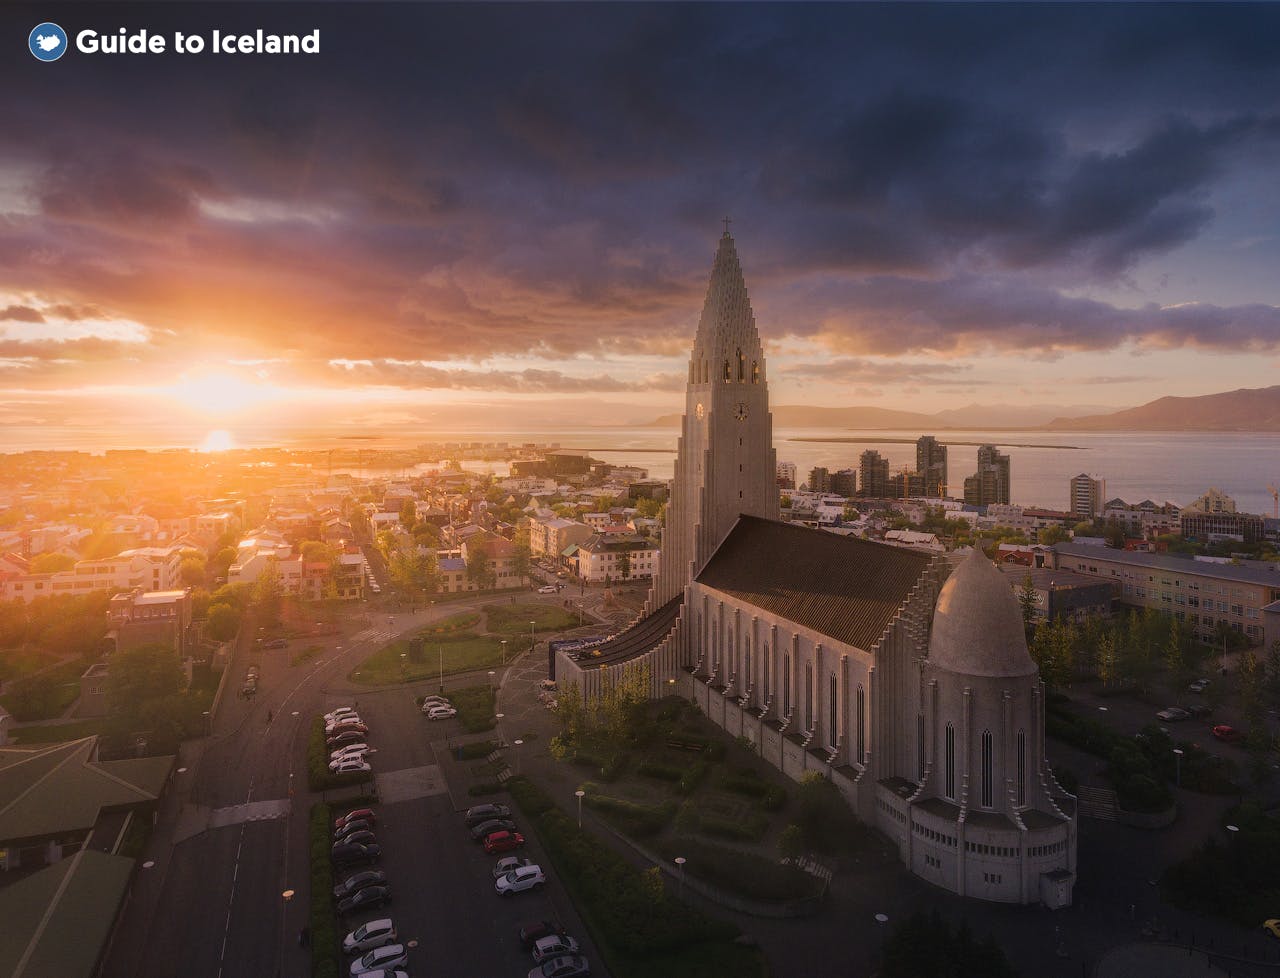 An overhead shot of Hallgrimskirkja Church in downtown Reykjavik.